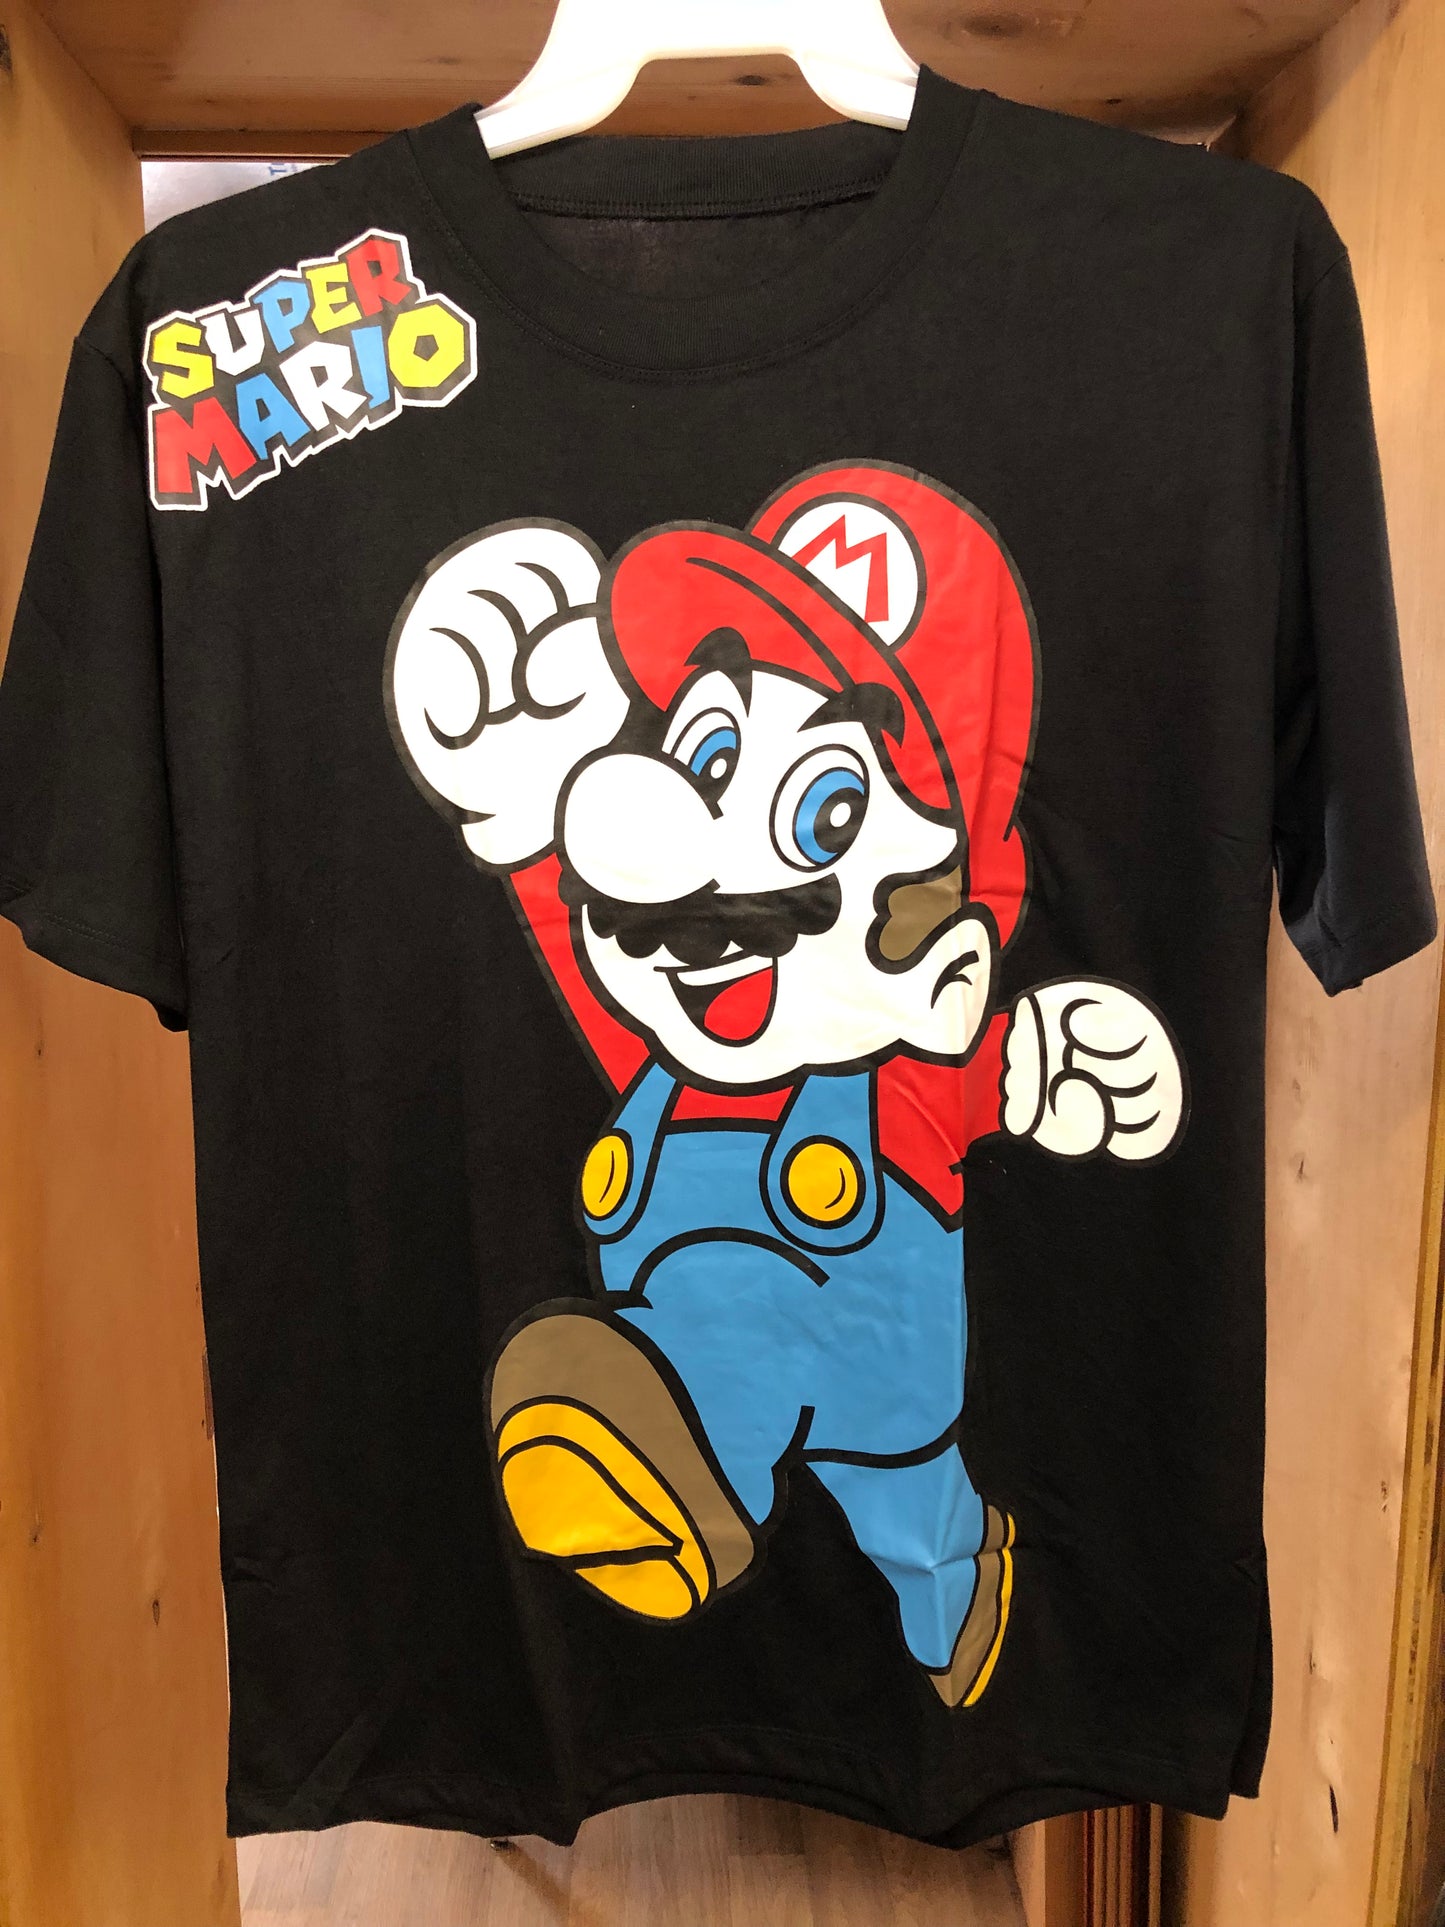 Men/Or Woman  Graphic Nintendo Super Mario T-Shirt Color Black Size L/XL  "New Arrival"